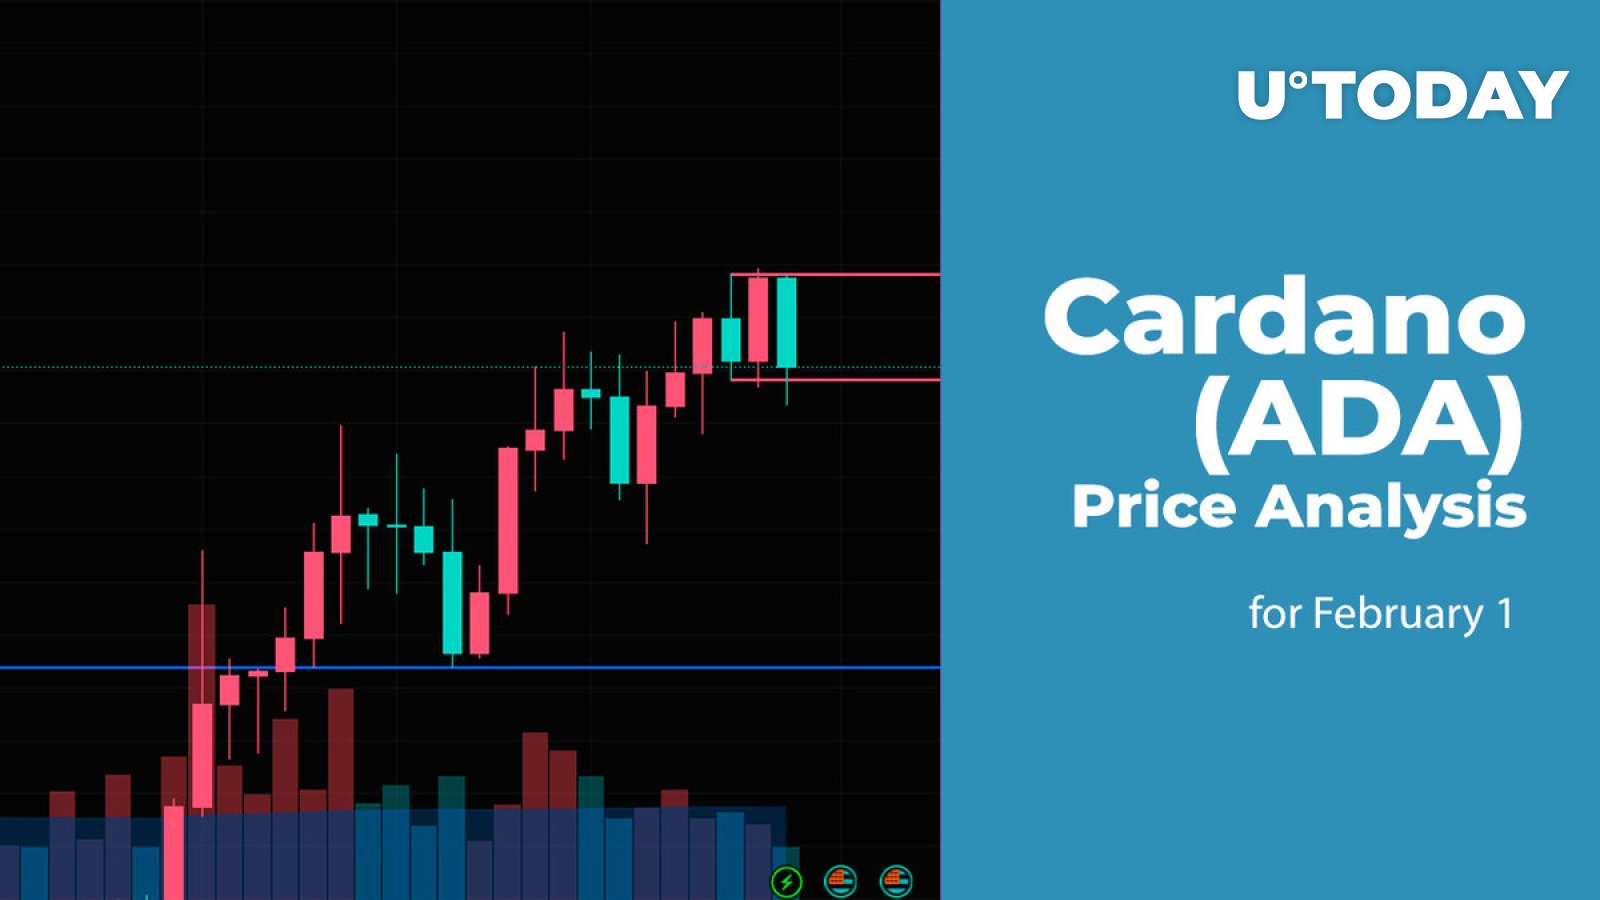 Cardano (ADA) Price Analysis for February 1 - BitcoinEthereumNews.com